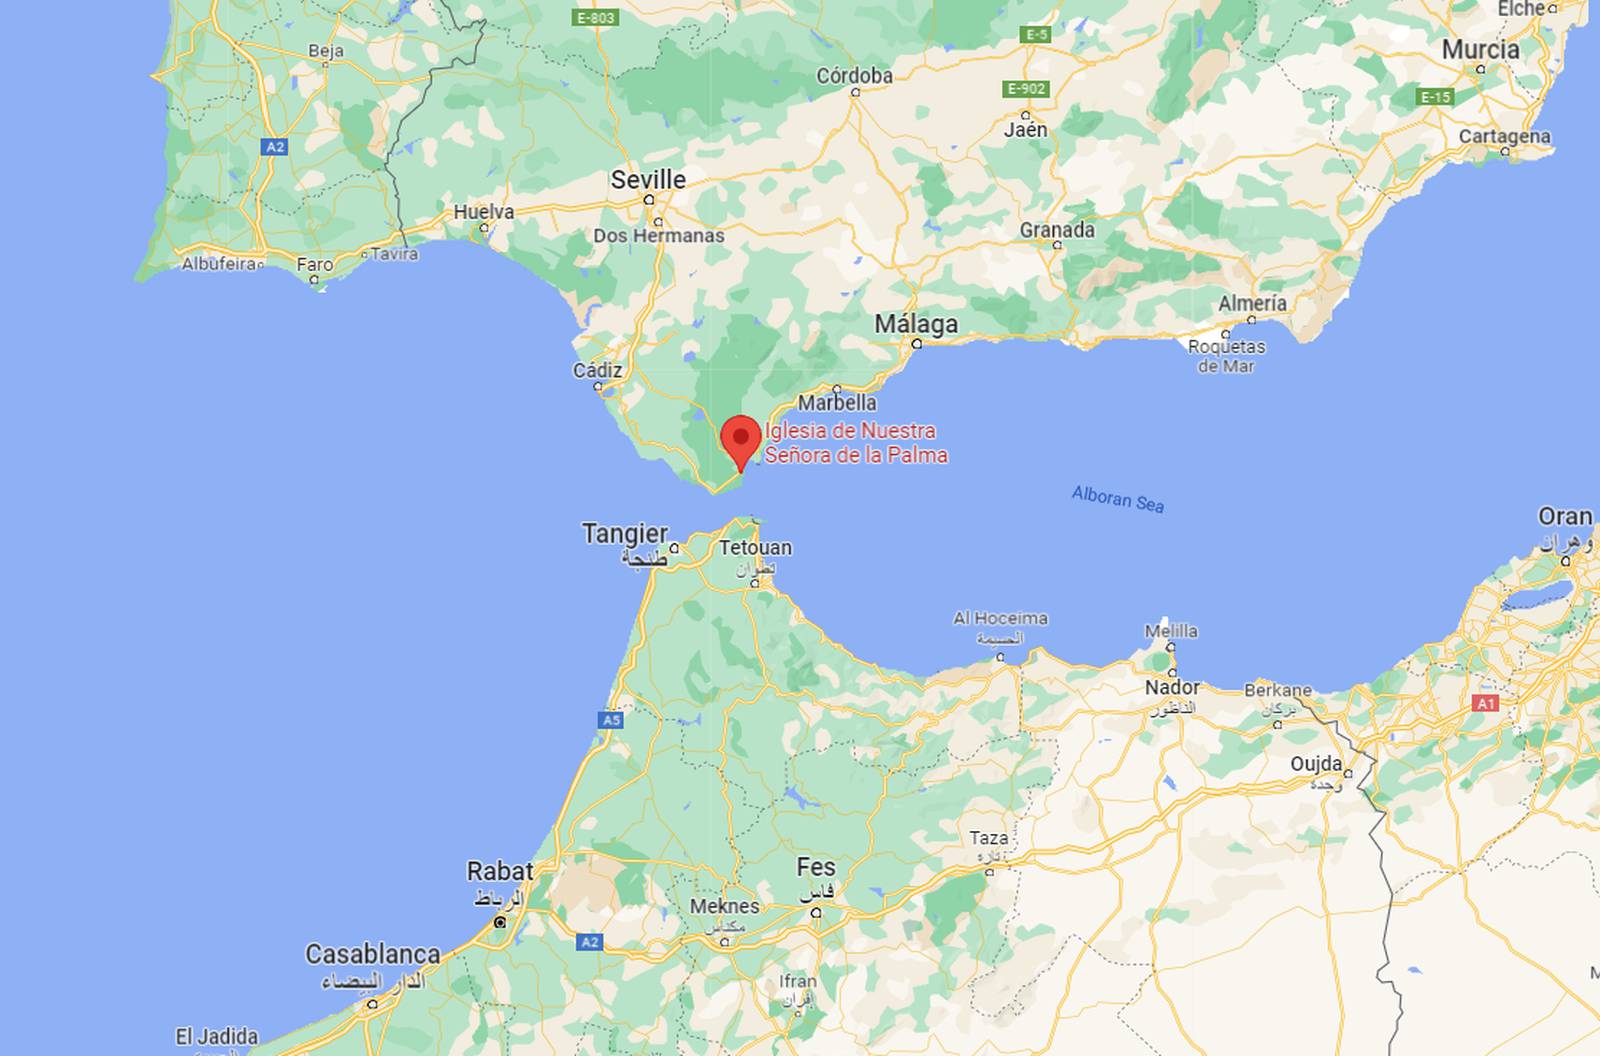 Algeciras southern spain church attack google street view